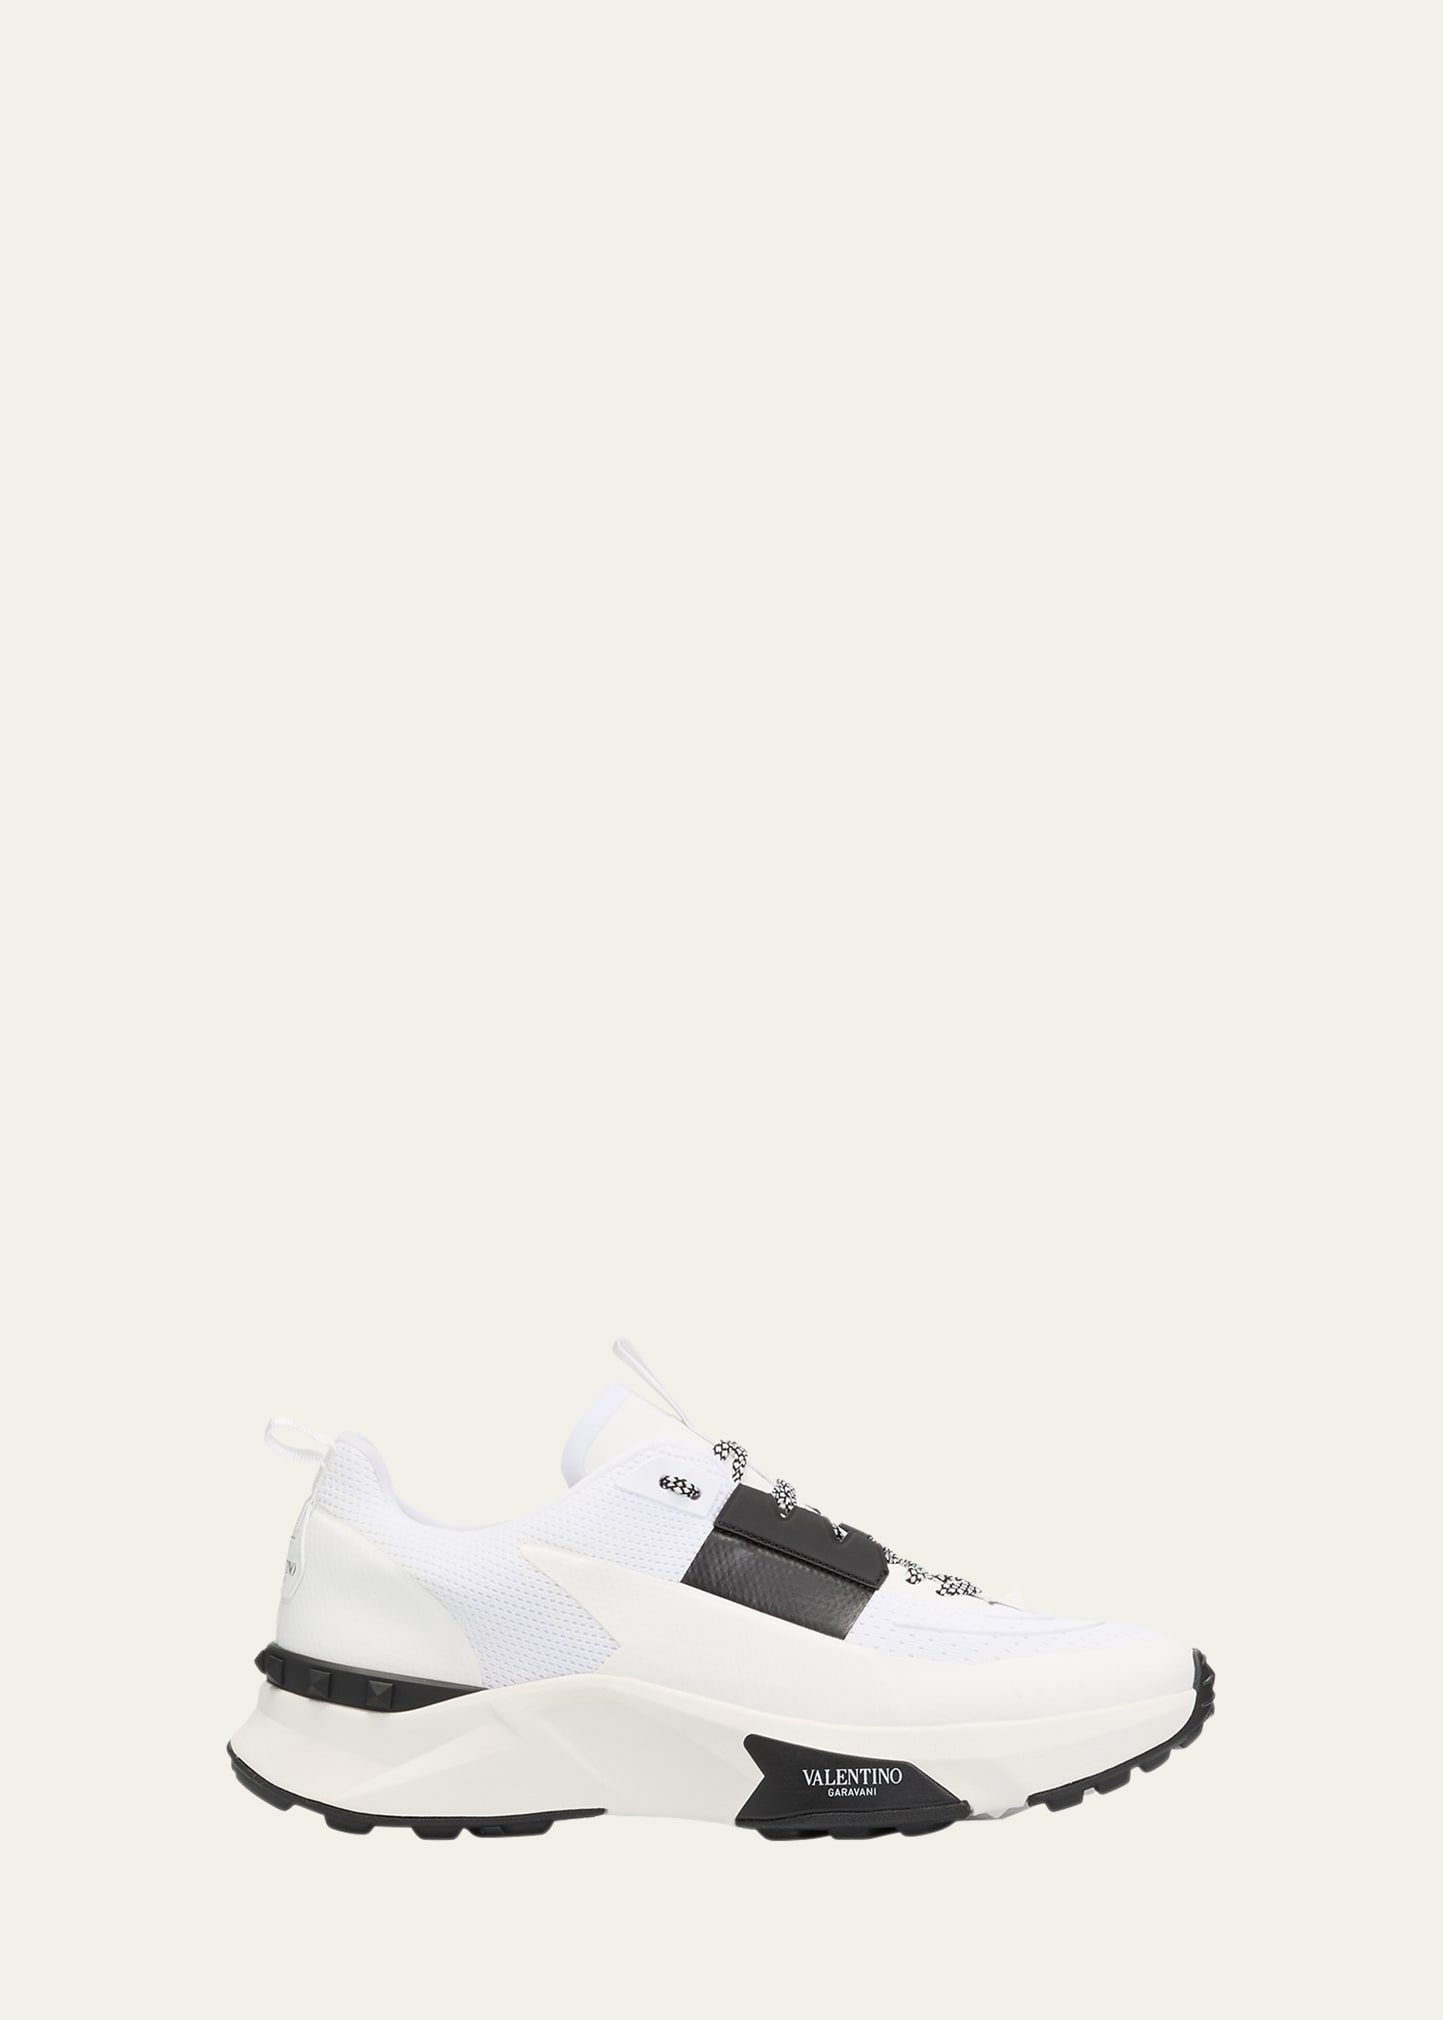 Valentino Garavani Men's Mesh And Leather Runner Sneakers In White/black